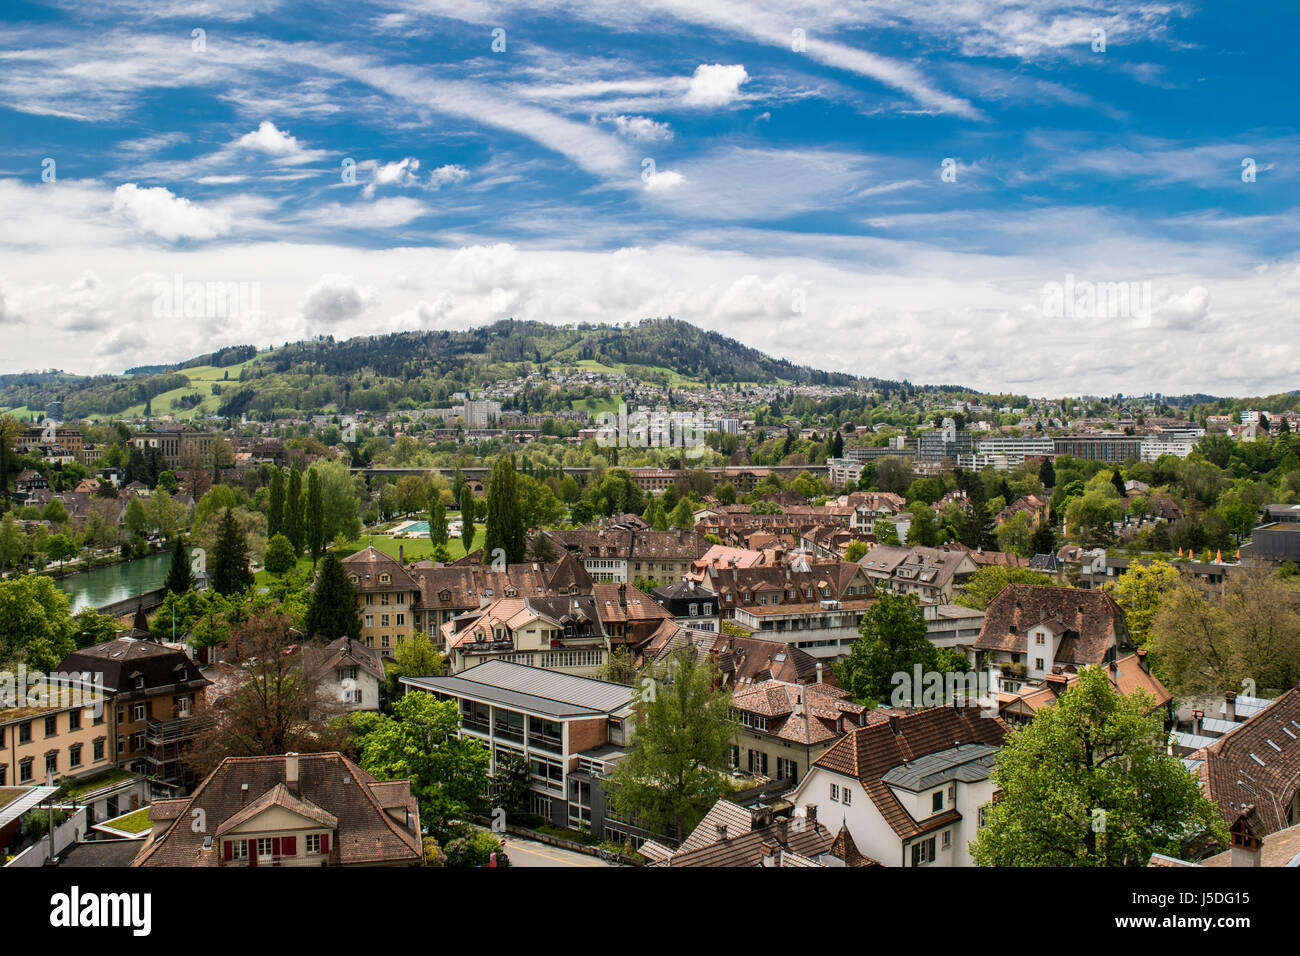 The capital city of Switzerland - Bern. Stock Photo